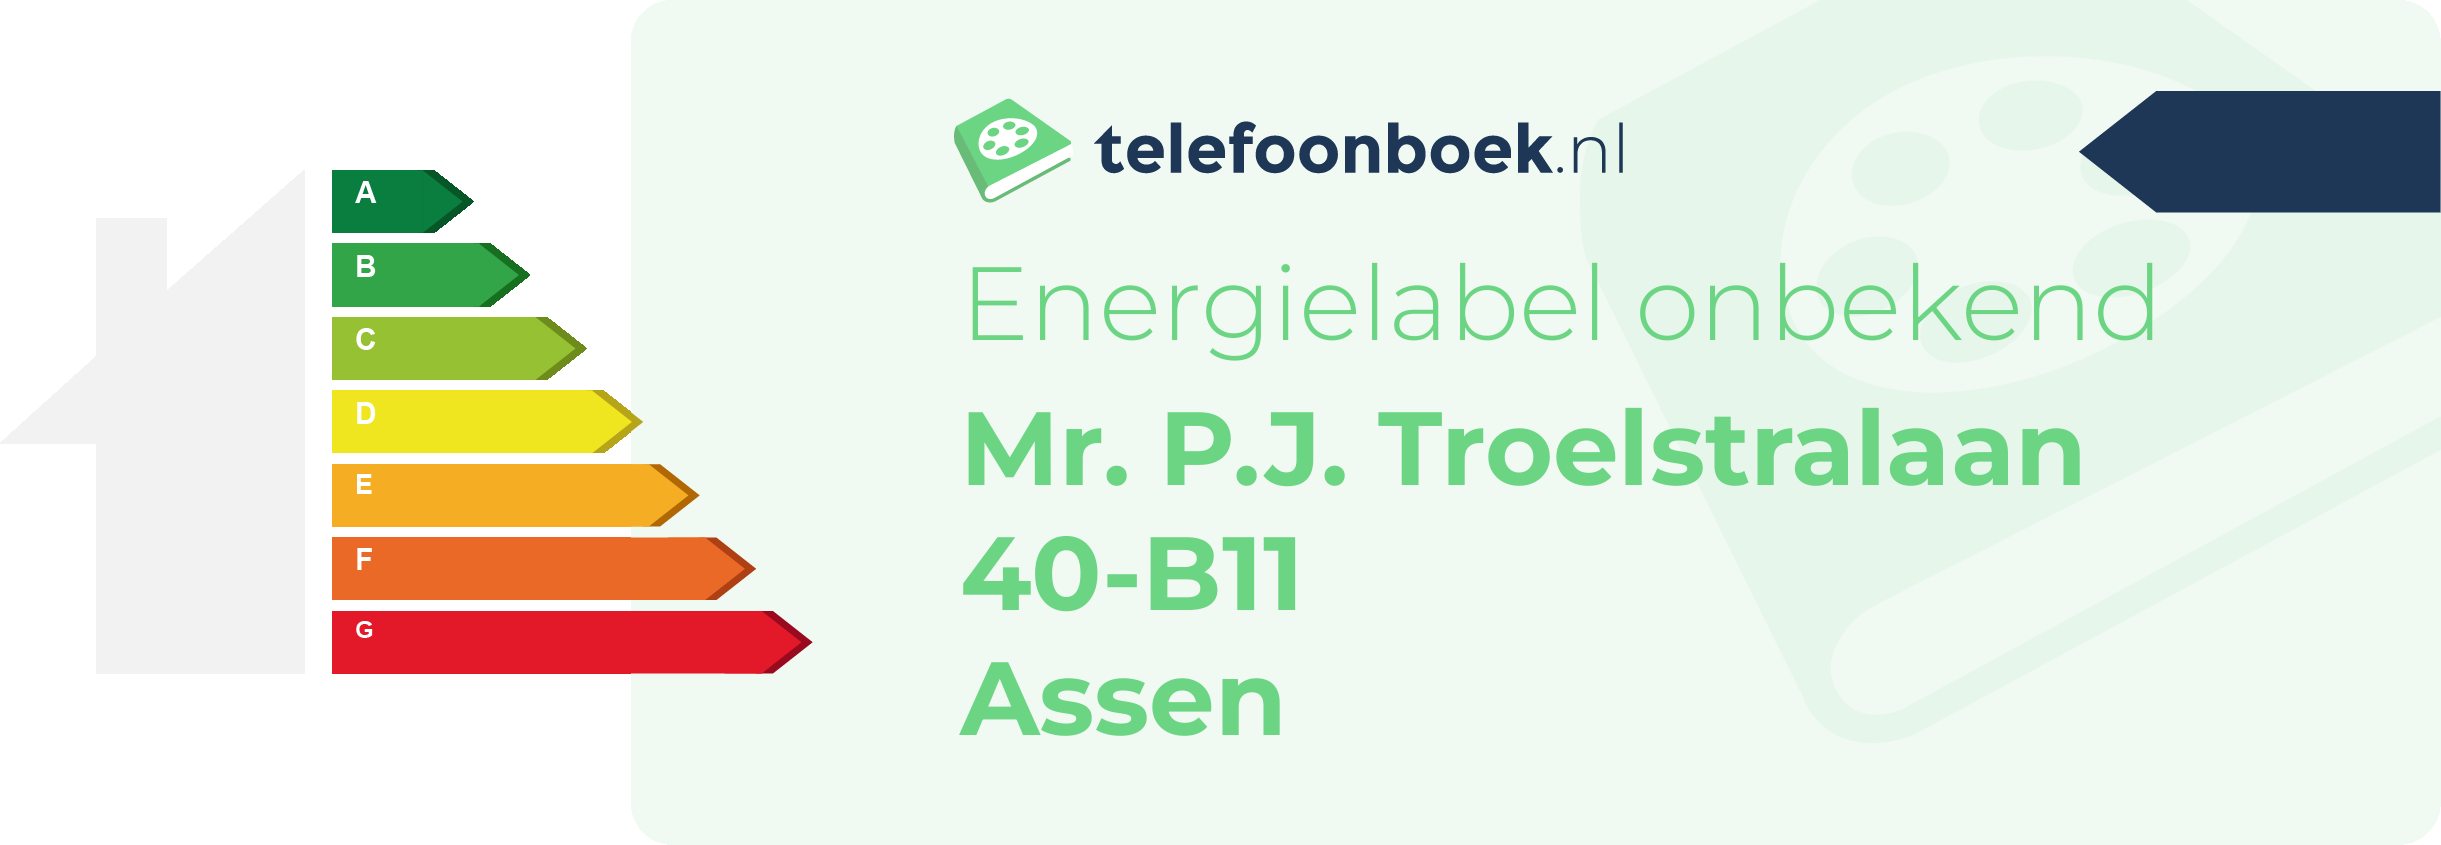 Energielabel Mr. P.J. Troelstralaan 40-B11 Assen